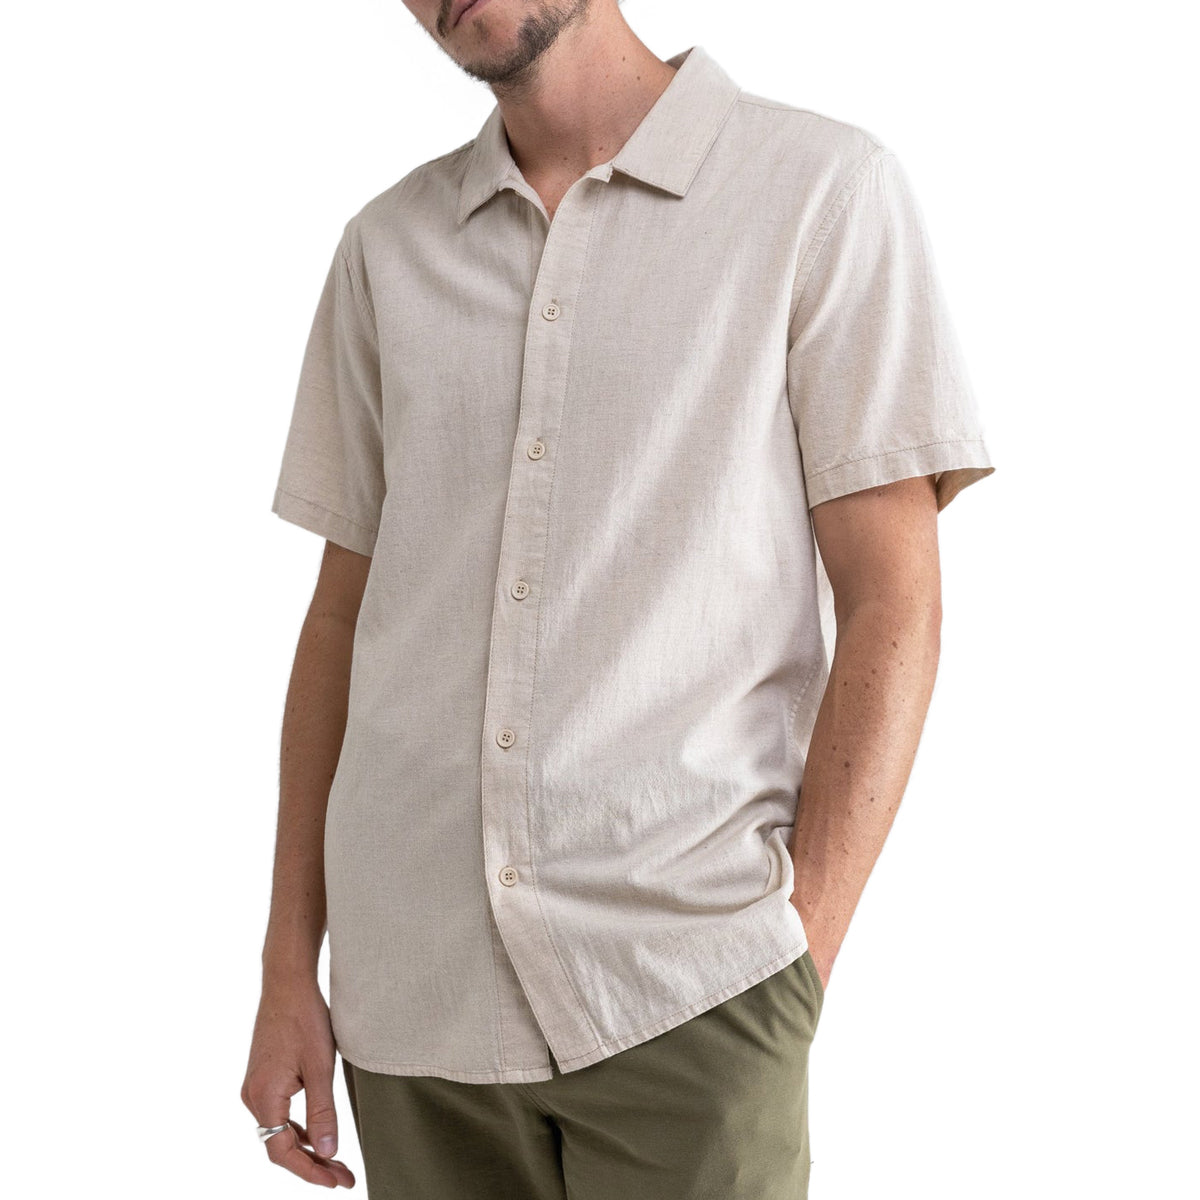 Rhythm Classic Linen Shirt - Sand image 1